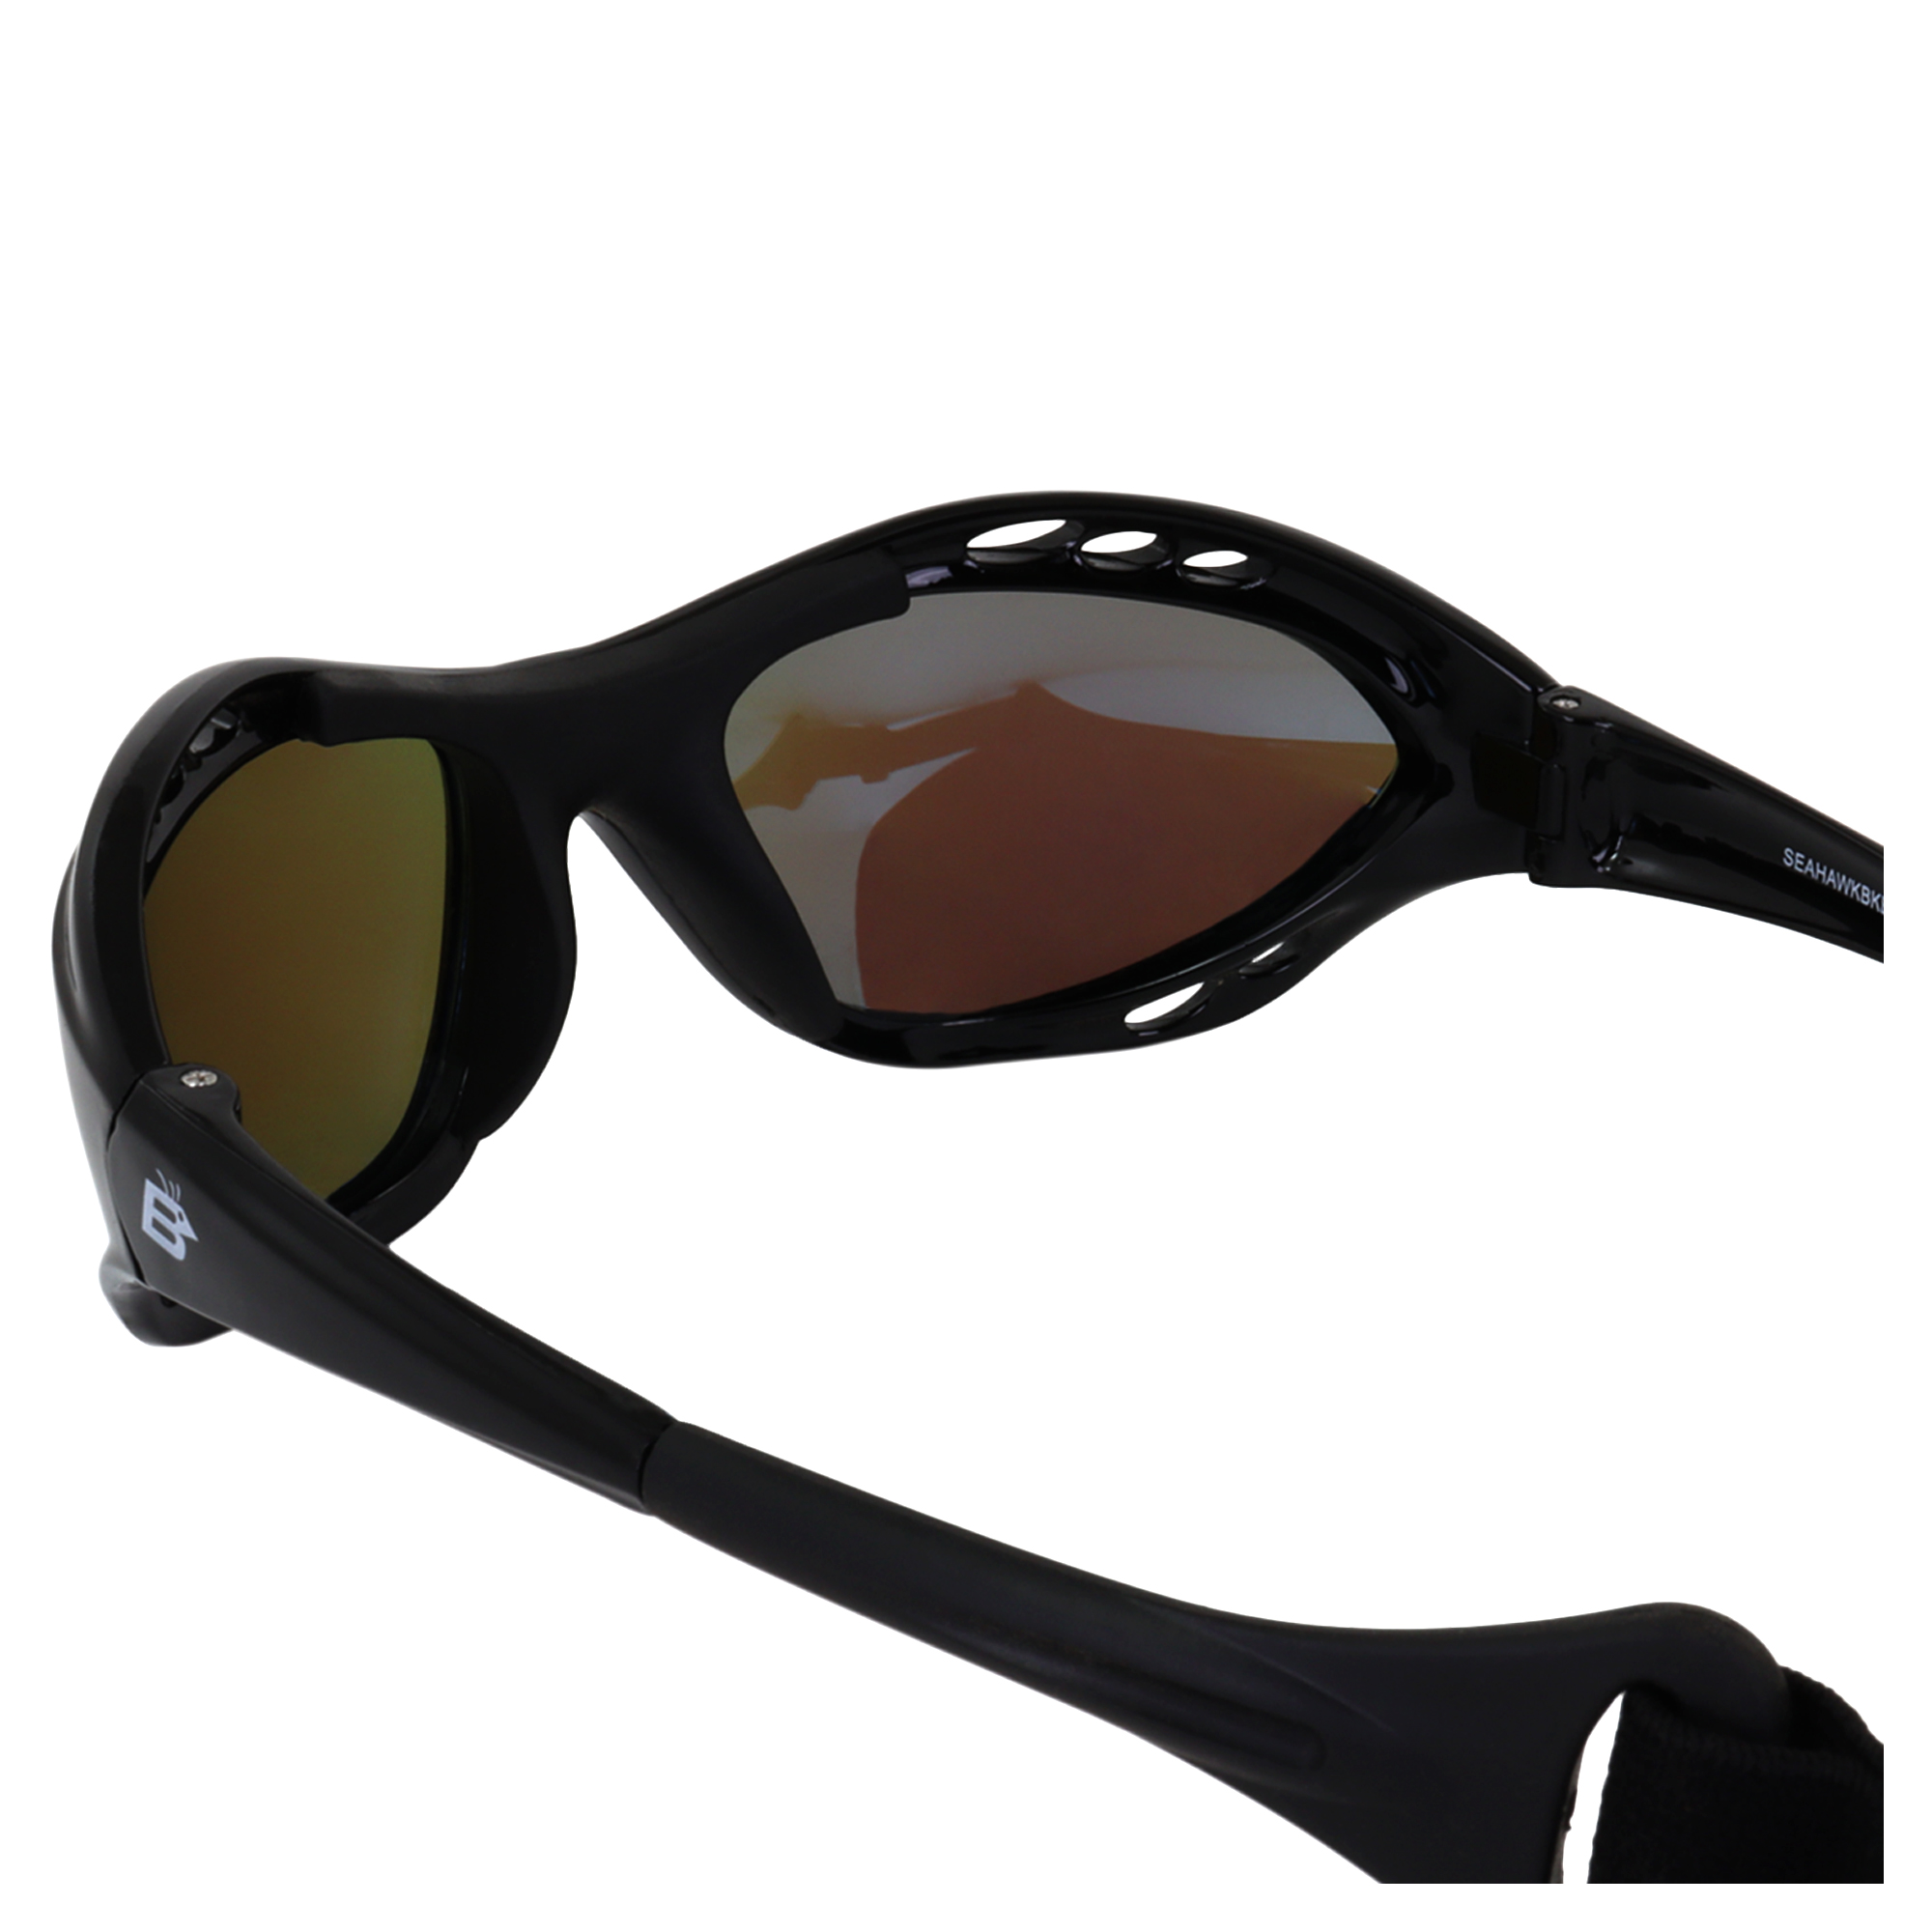 Birdz Seahawk Padded Polarized Sunglasses Jetski Kayaking Jet Ski Watersports w/ Built in Strap Black Frame and Polarized ReflecTech Green Mirror Lens - image 4 of 6